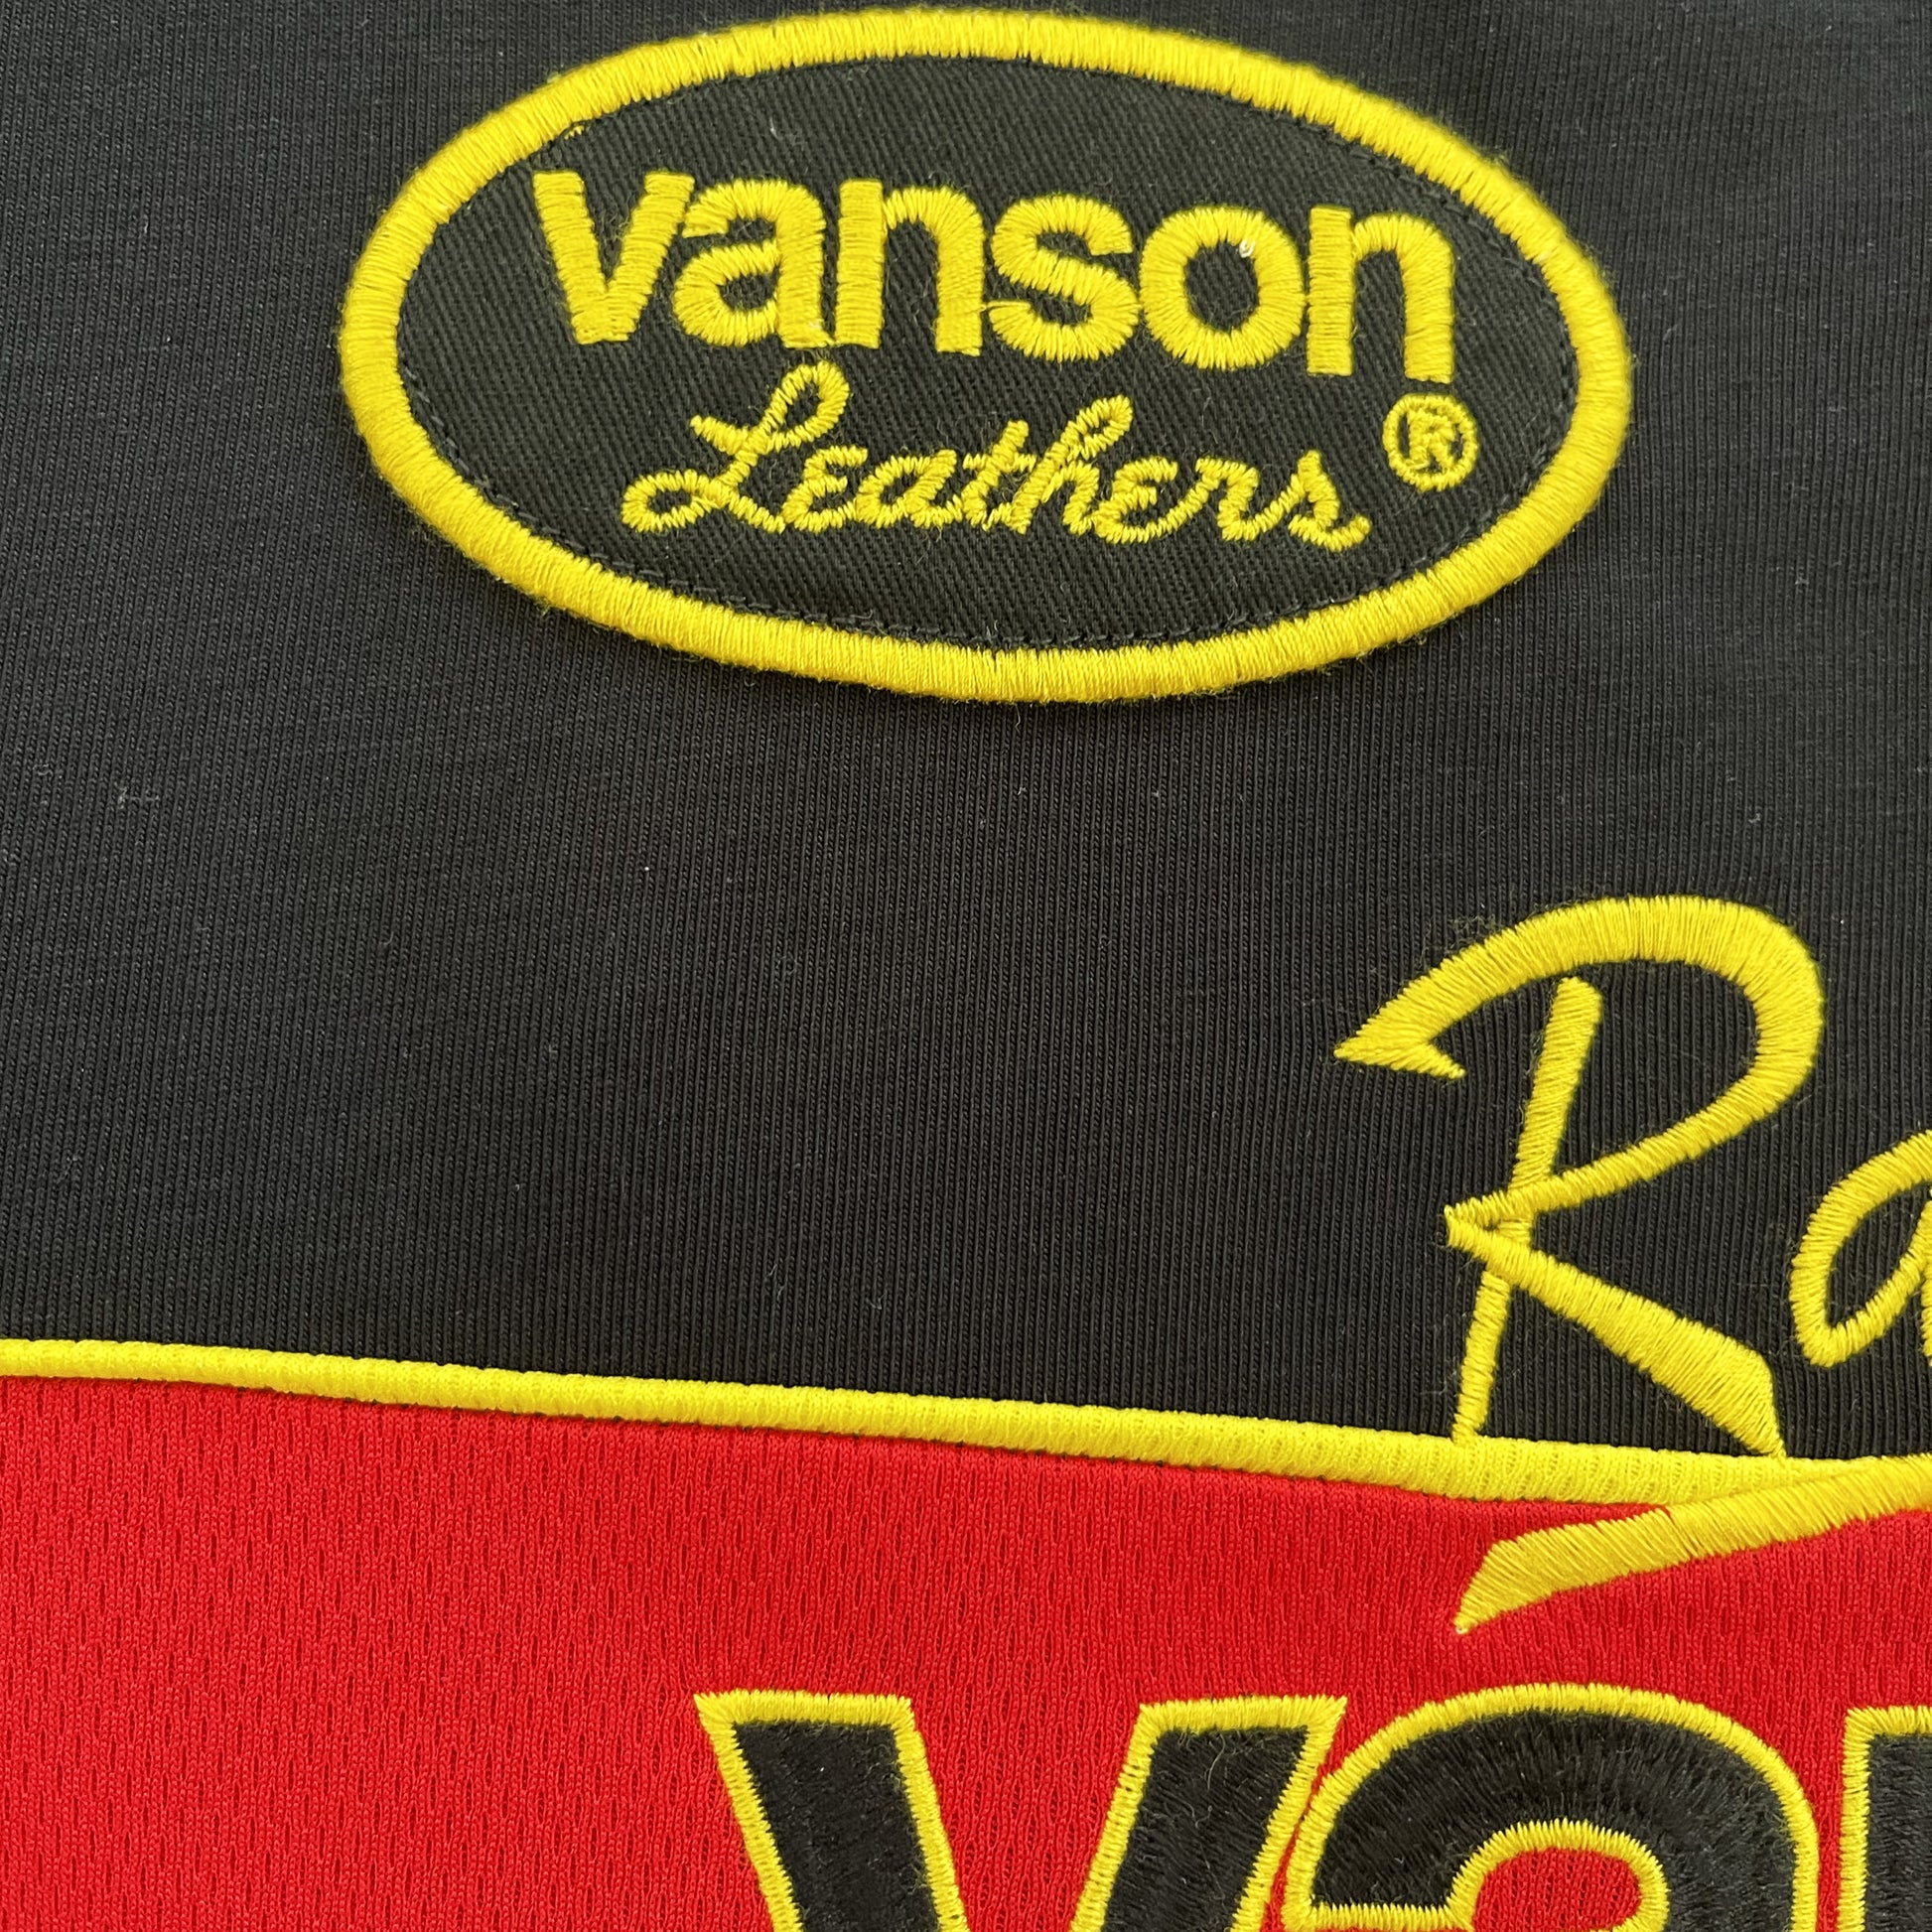 Vanson Leathers Long Sleeve Motocross T-Shirt